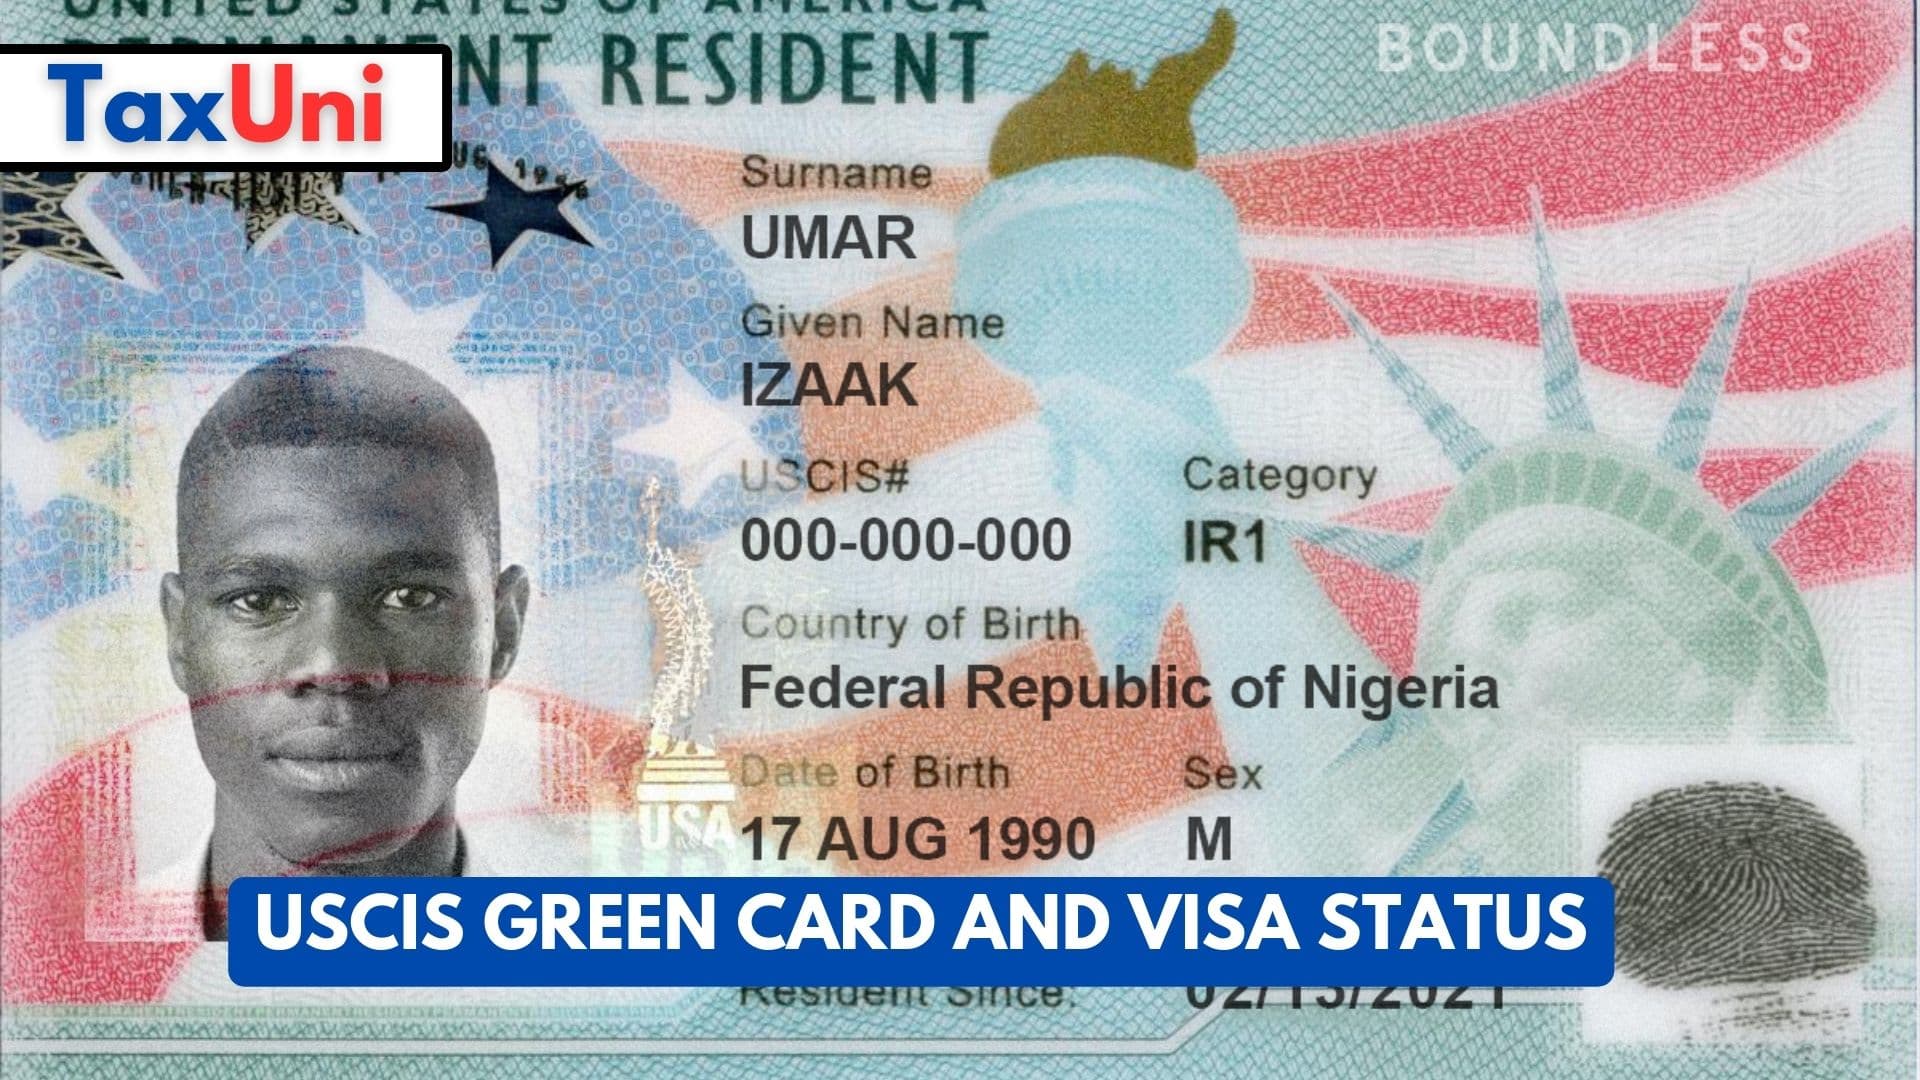 USCIS Green Card and Visa Status